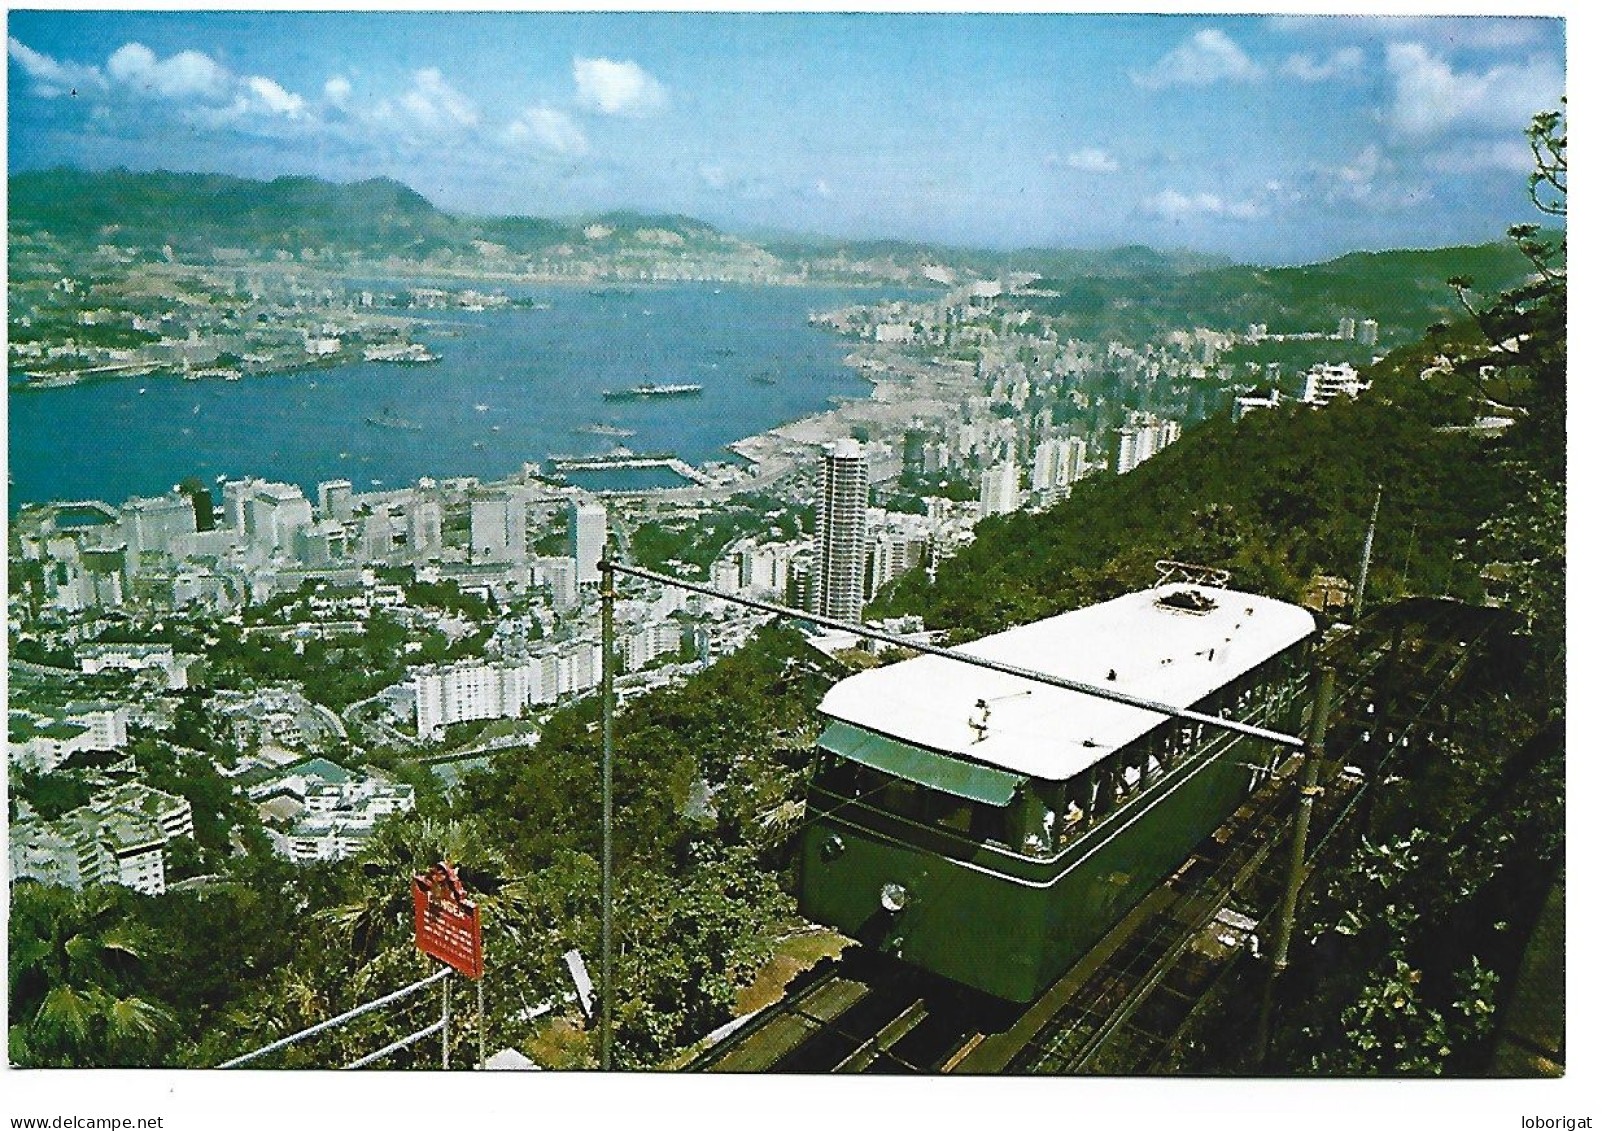 THE HONG KONG PEAK TRAMWAY.- TRANVIA - TRAMWAY - " HONG KONG " - Funicular Railway